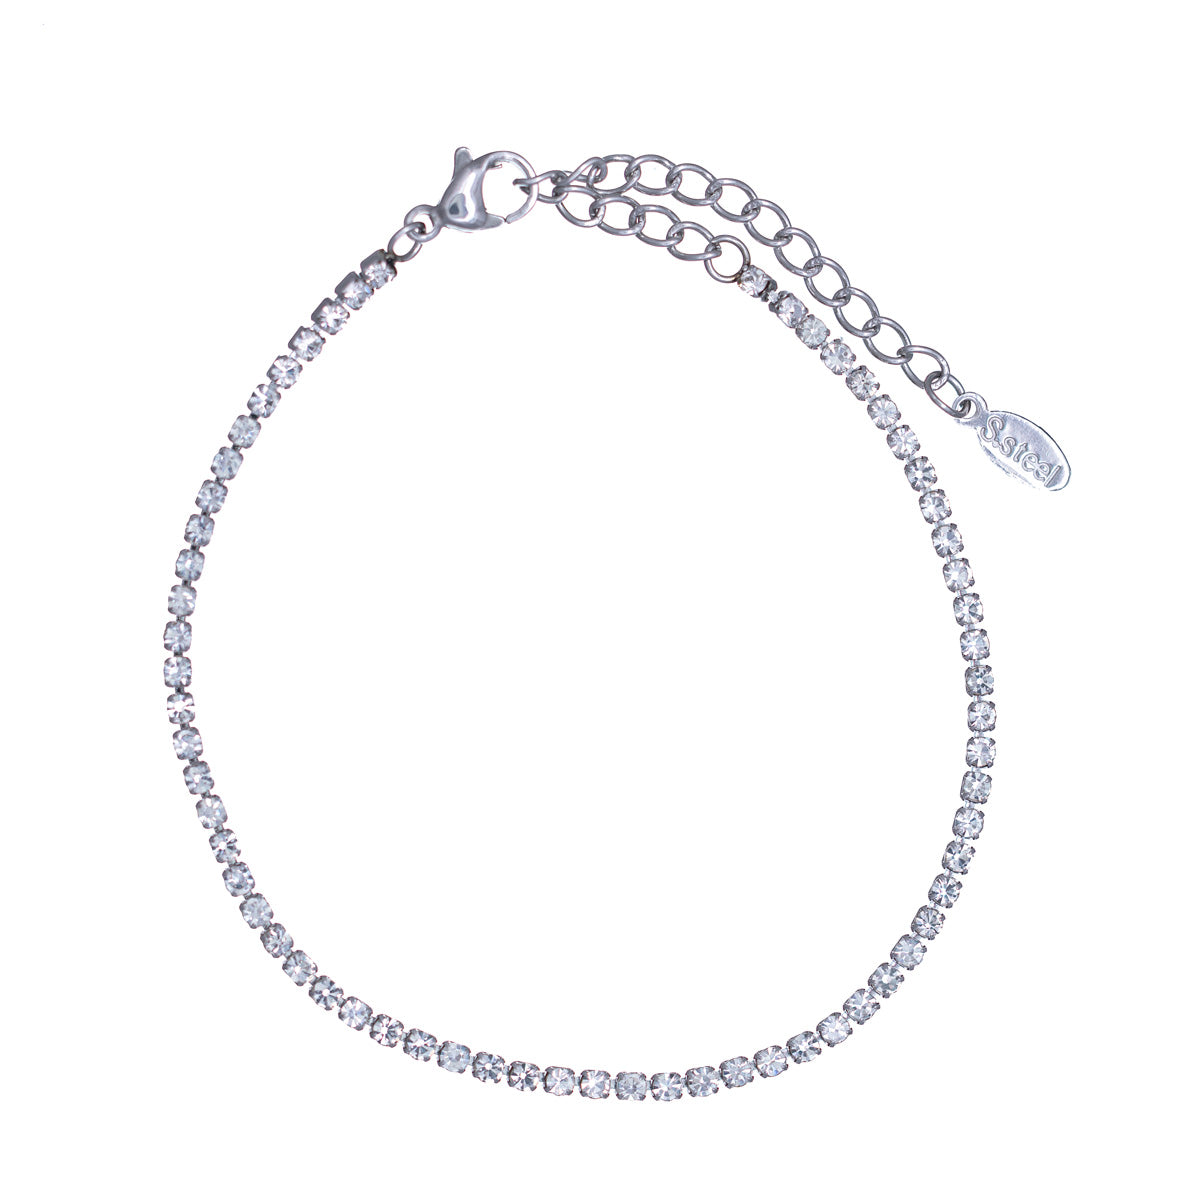 Narrow rhinestone bracelet with clear stones (Steel 316L)